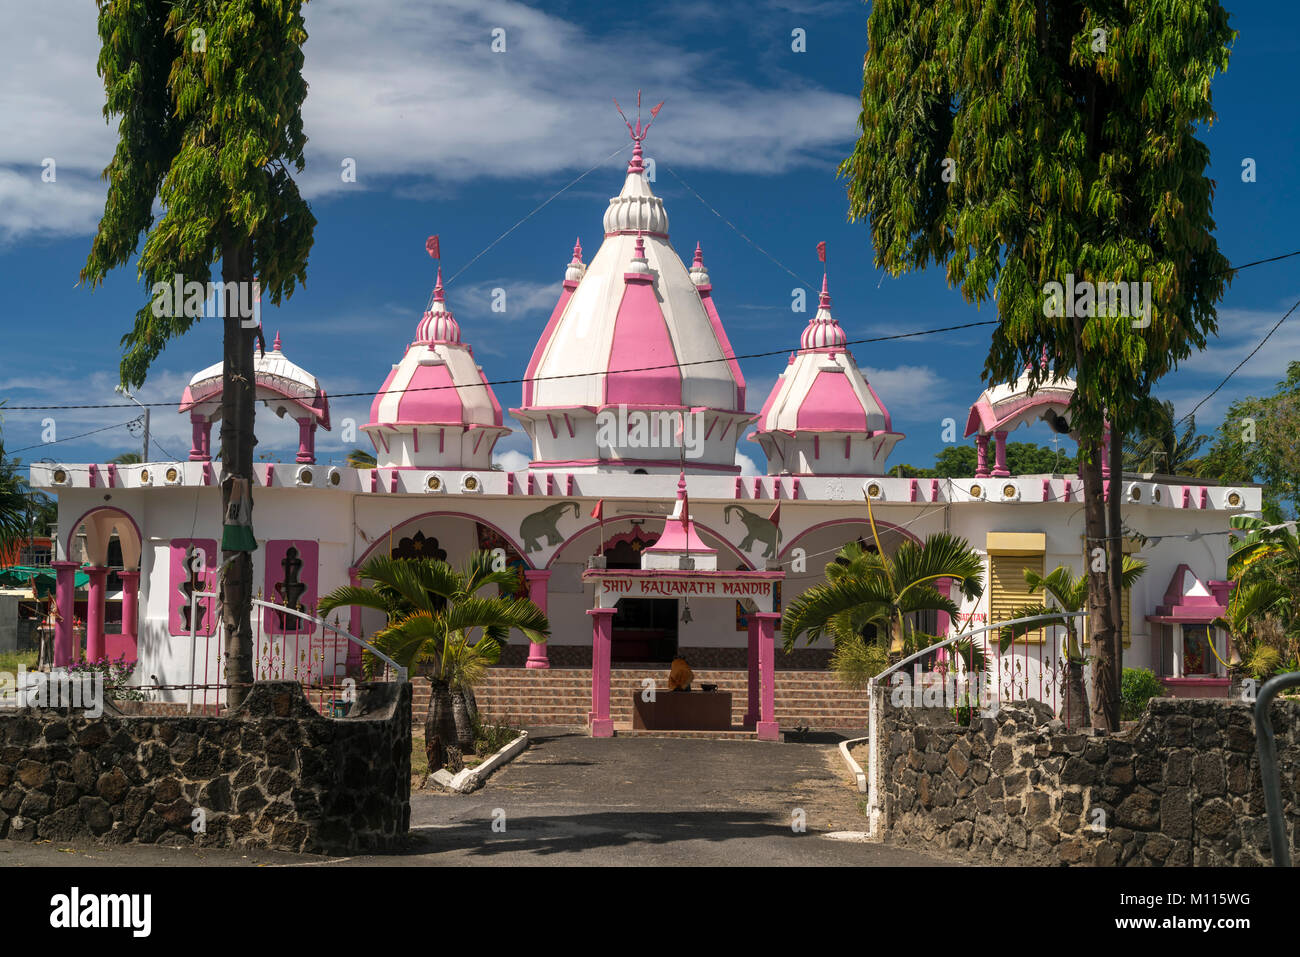 Kalyanath Hindutempel Shiv Mandir, Grand Baie, Maurice, Afrika | Kalyanath Shiv Mandir temple hindou, Grand Baie, Ile Maurice, Afrique, Banque D'Images